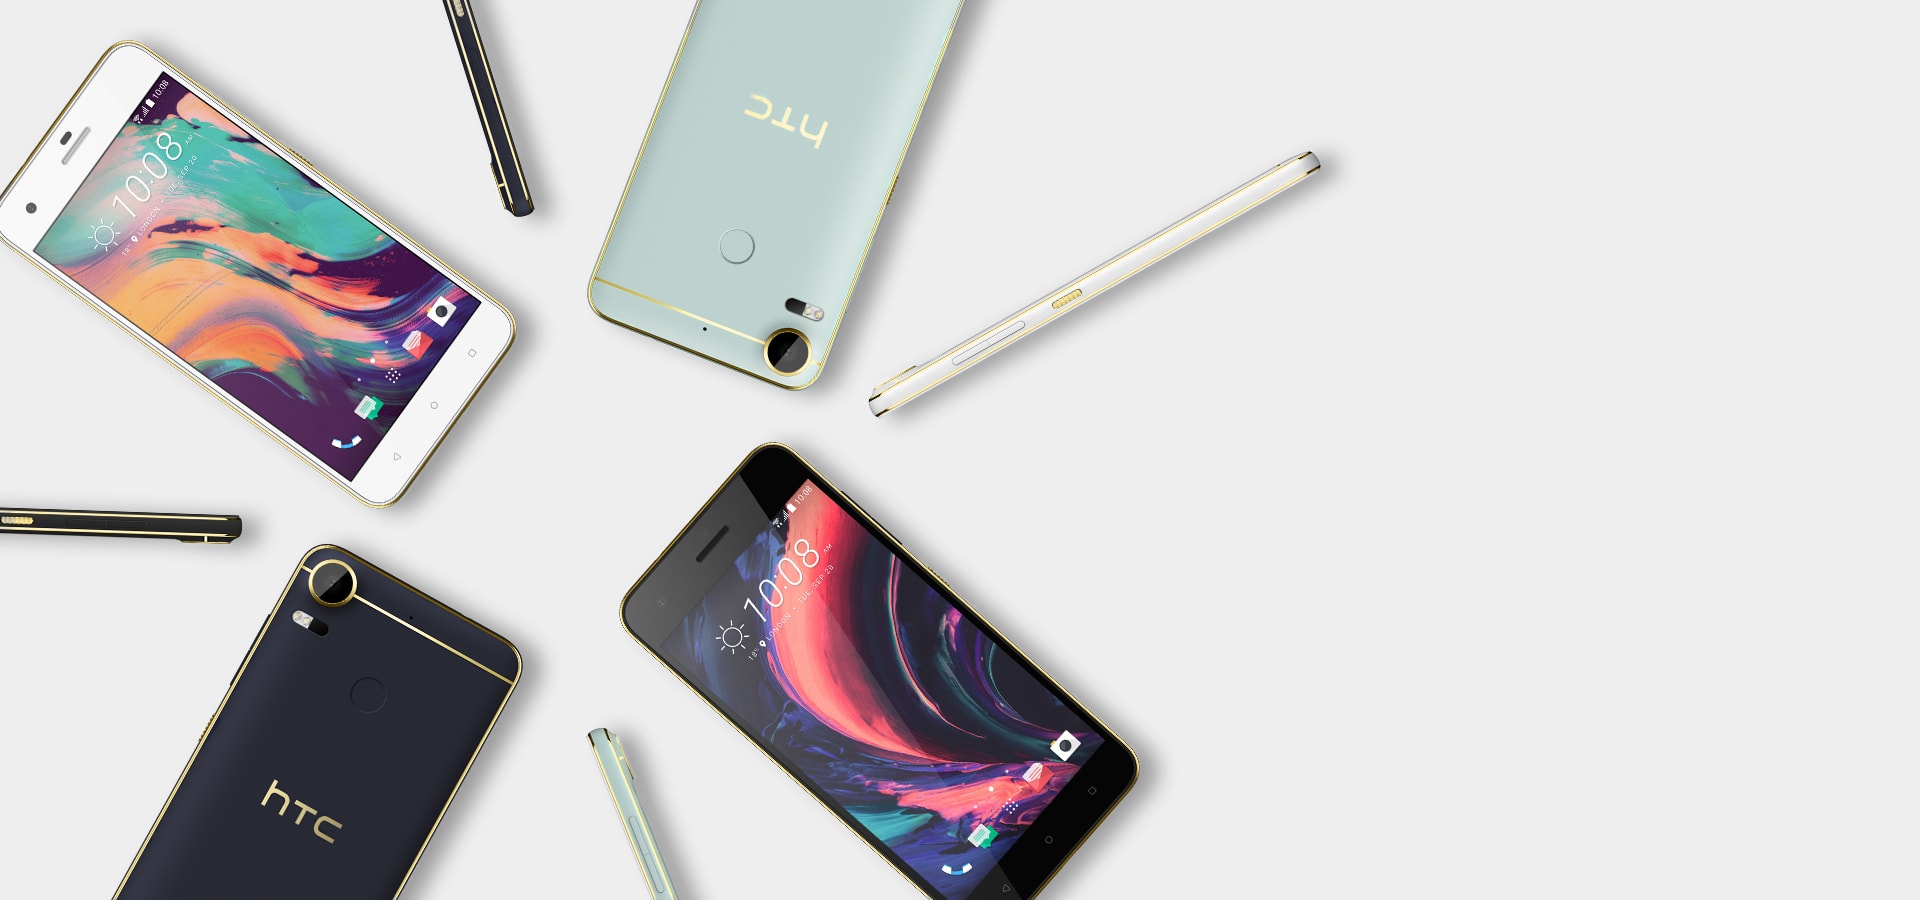 HTC announces Desire 10 series smartphones